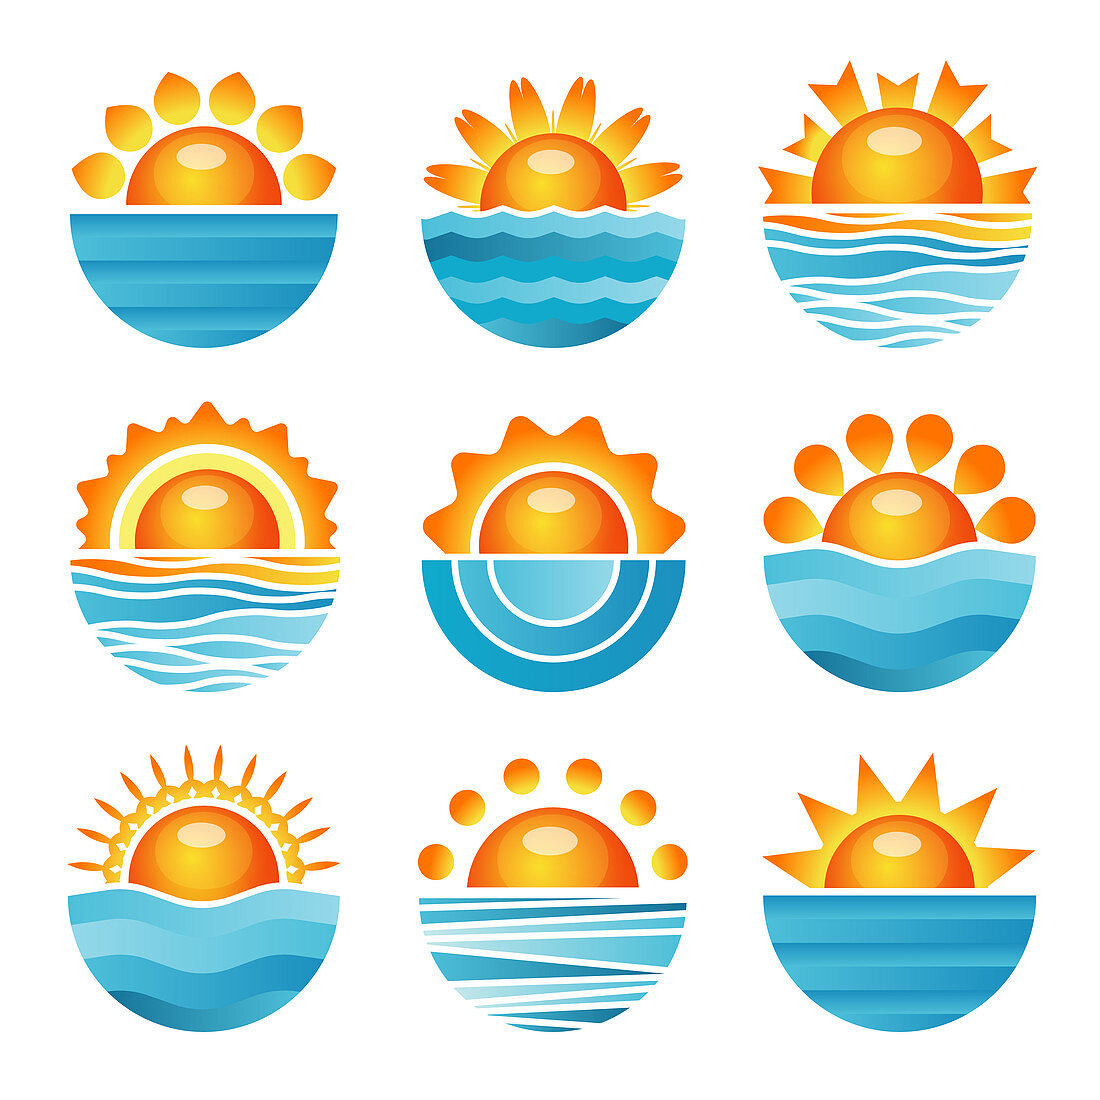 Sun and sea icons, illustration